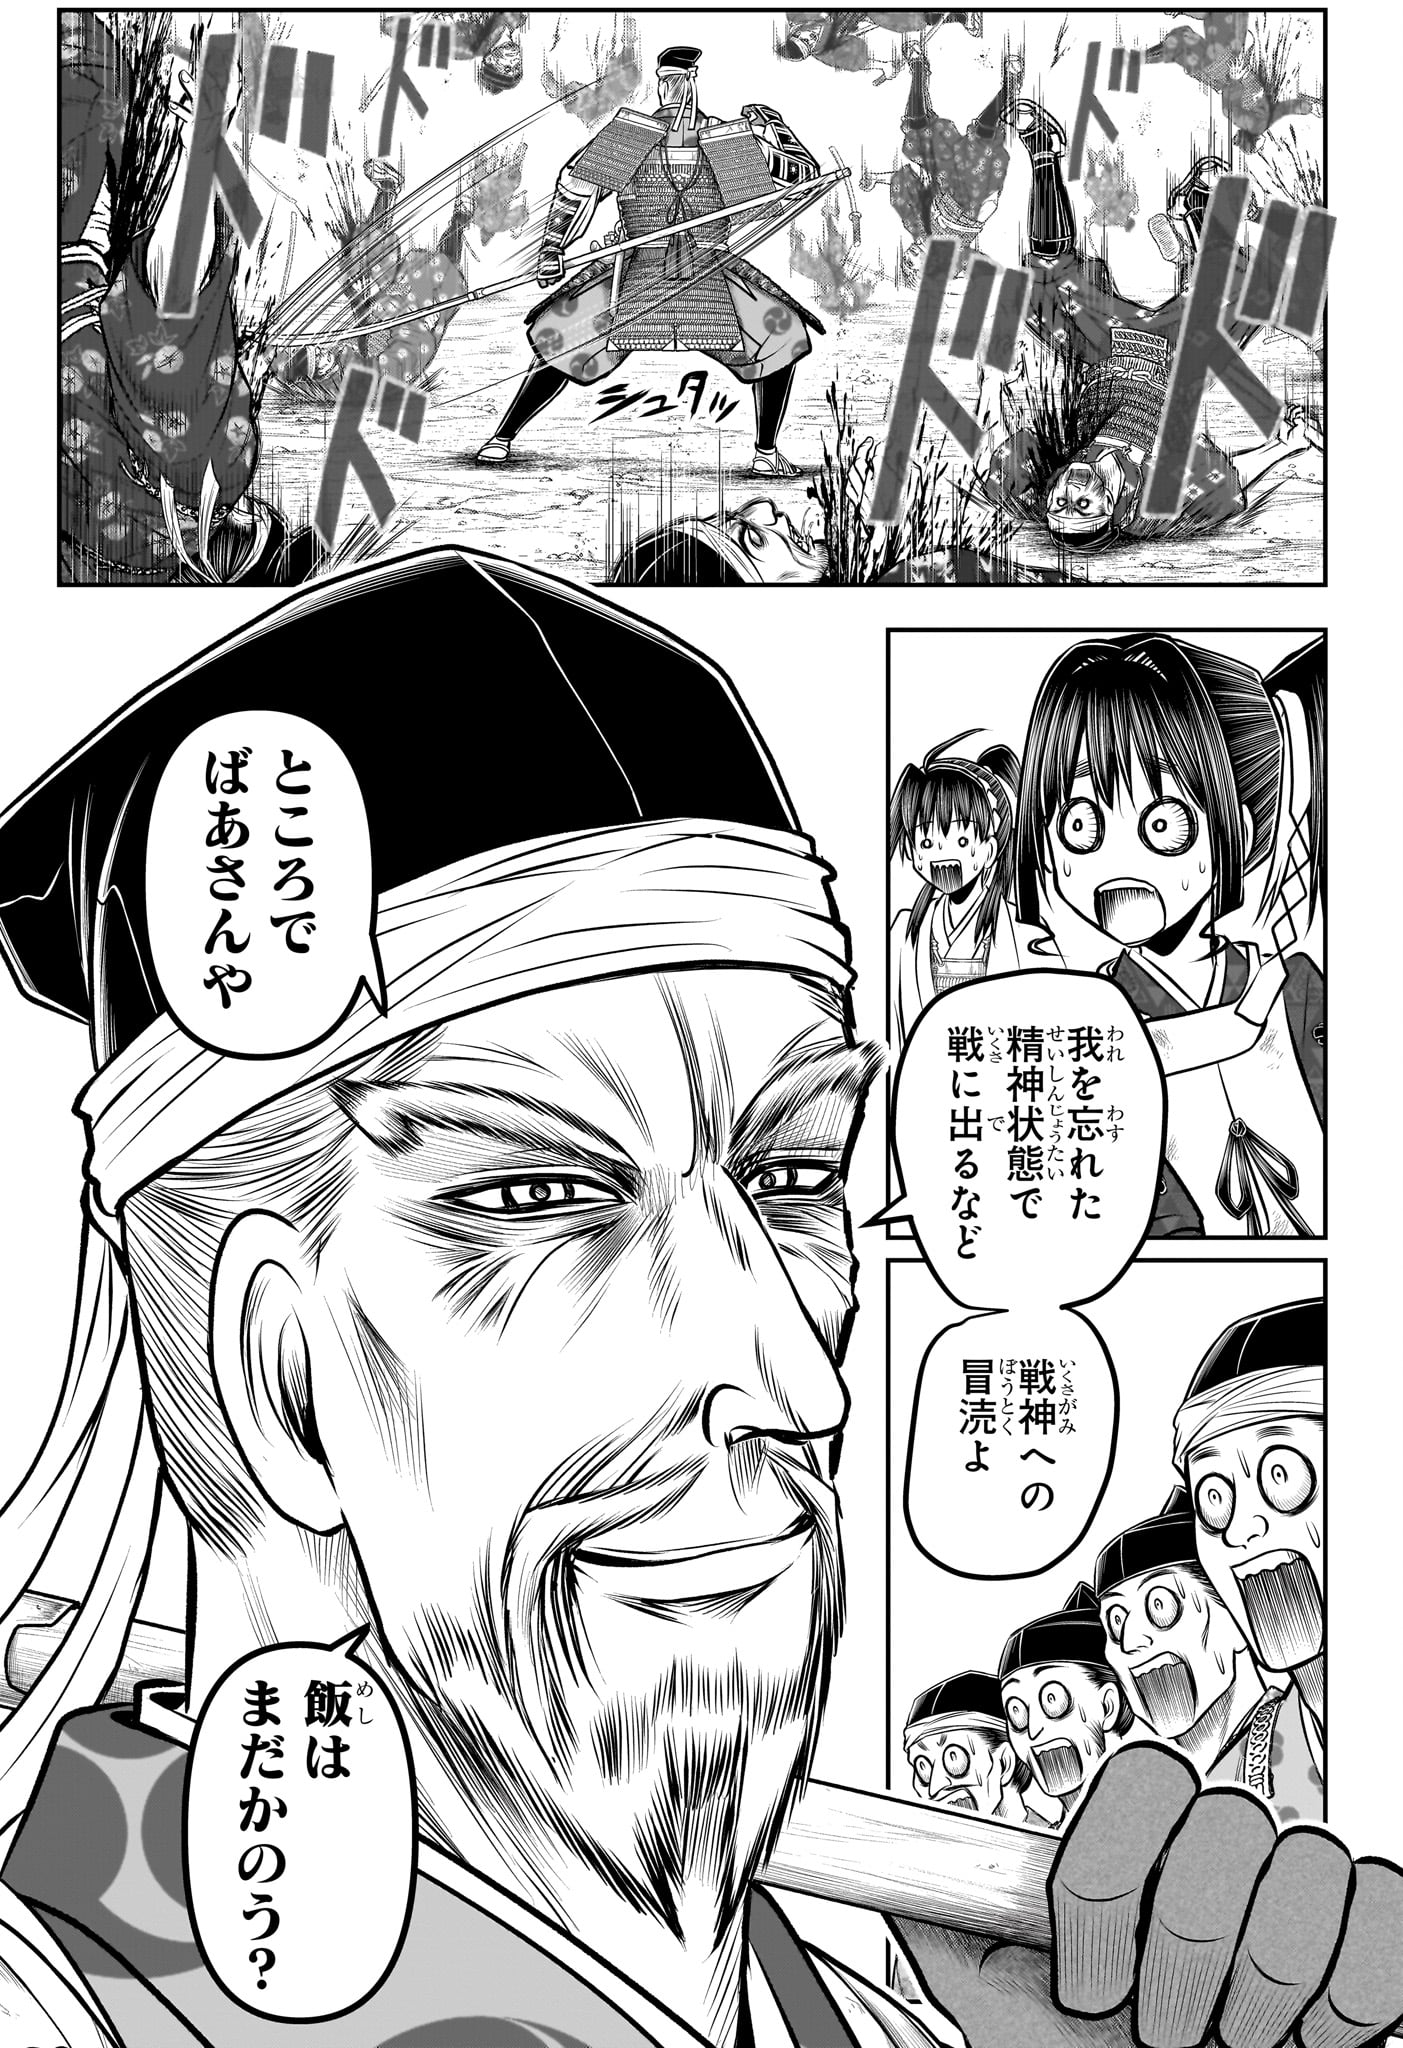 Nige Jouzu no Wakagimi - Chapter 161 - Page 9